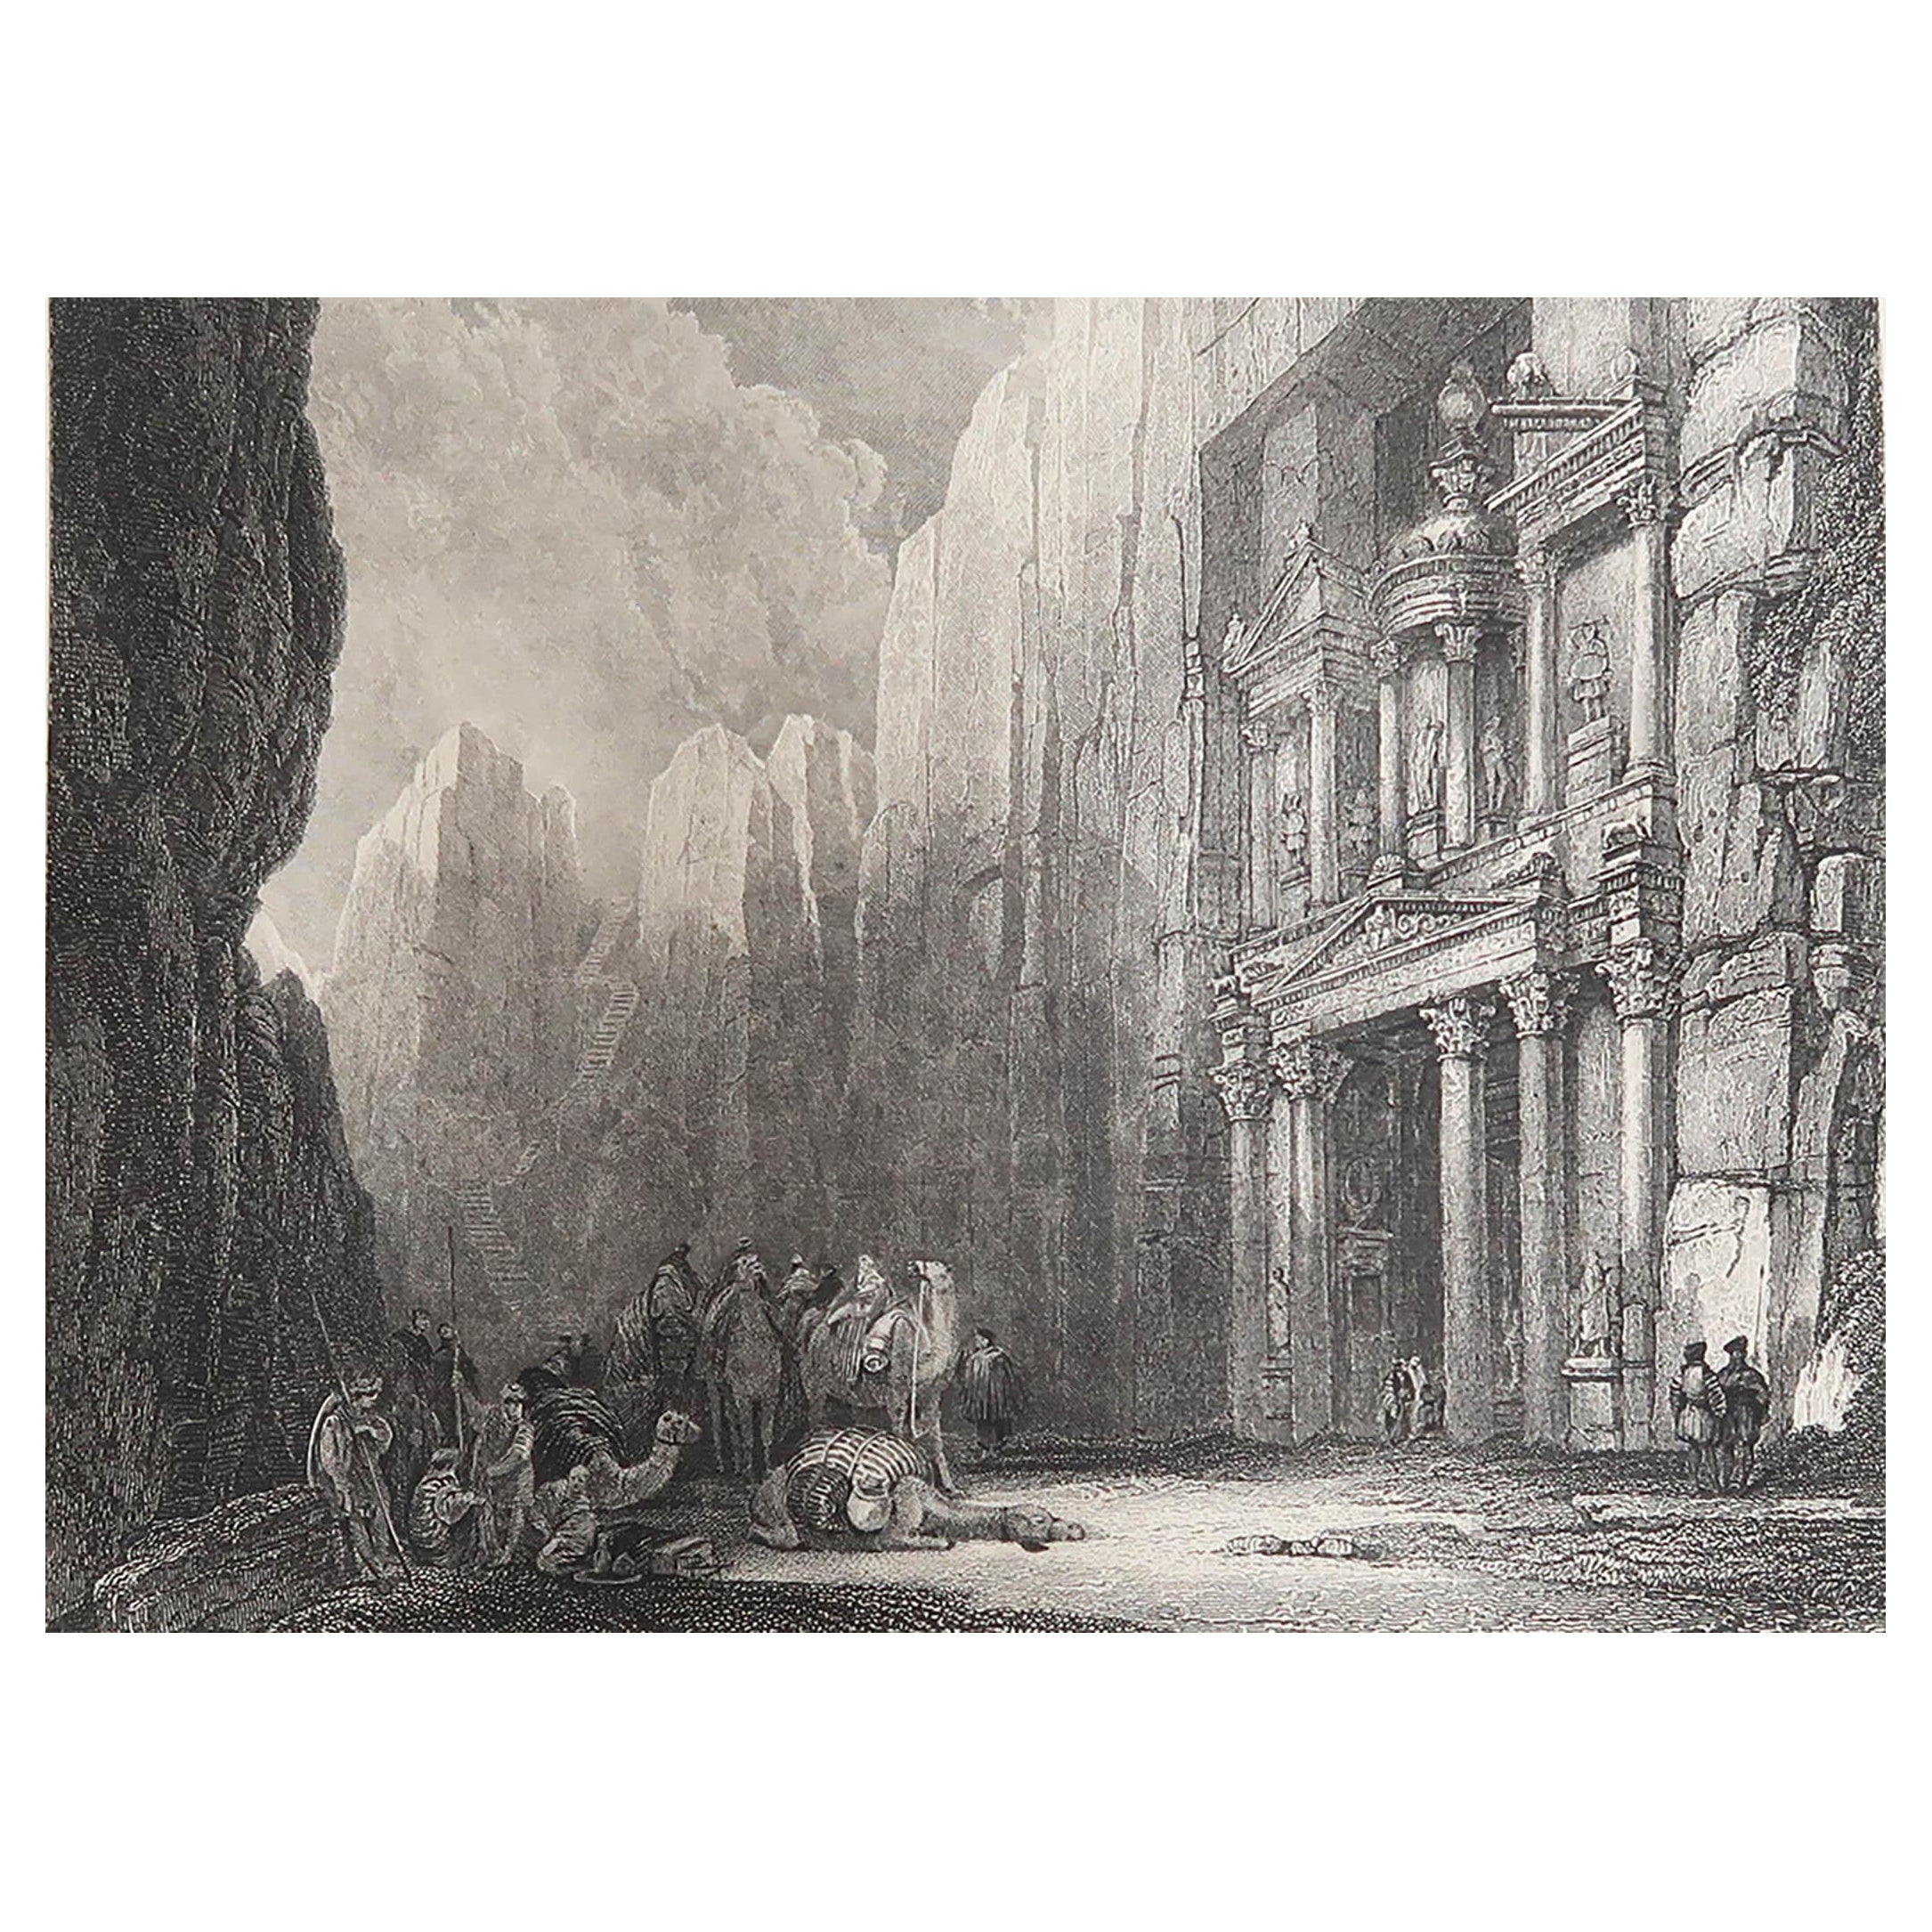 Original Antique Print of the Ancient City of Petra After David Roberts, C.1850